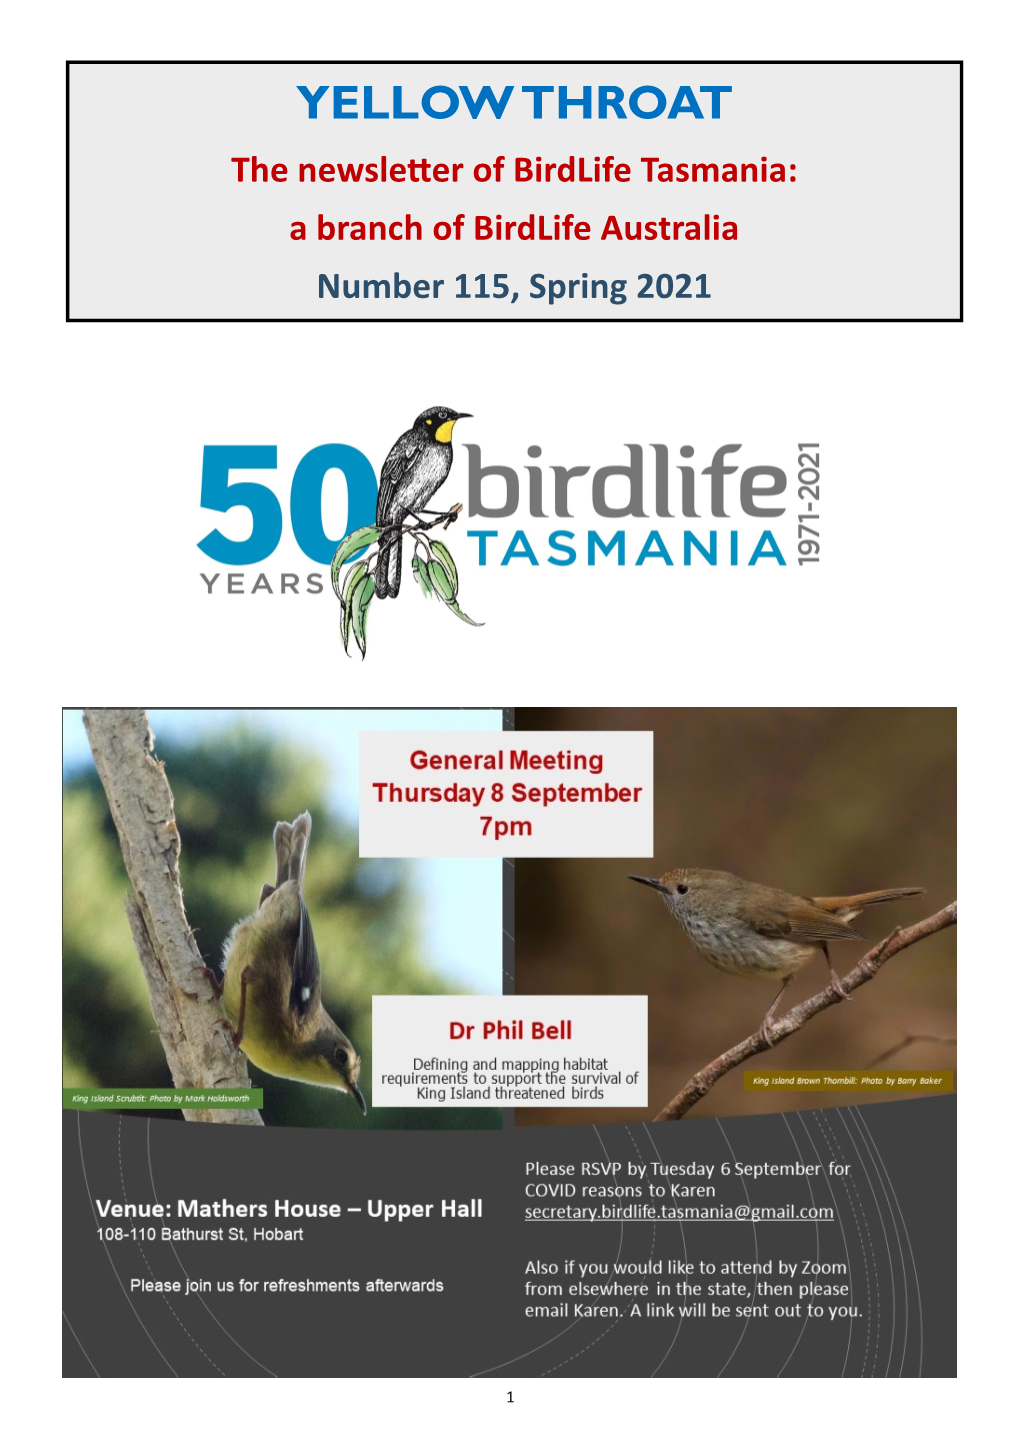 YELLOW THROAT the Newsletter of Birdlife Tasmania: a Branch of Birdlife Australia Number 115, Spring 2021